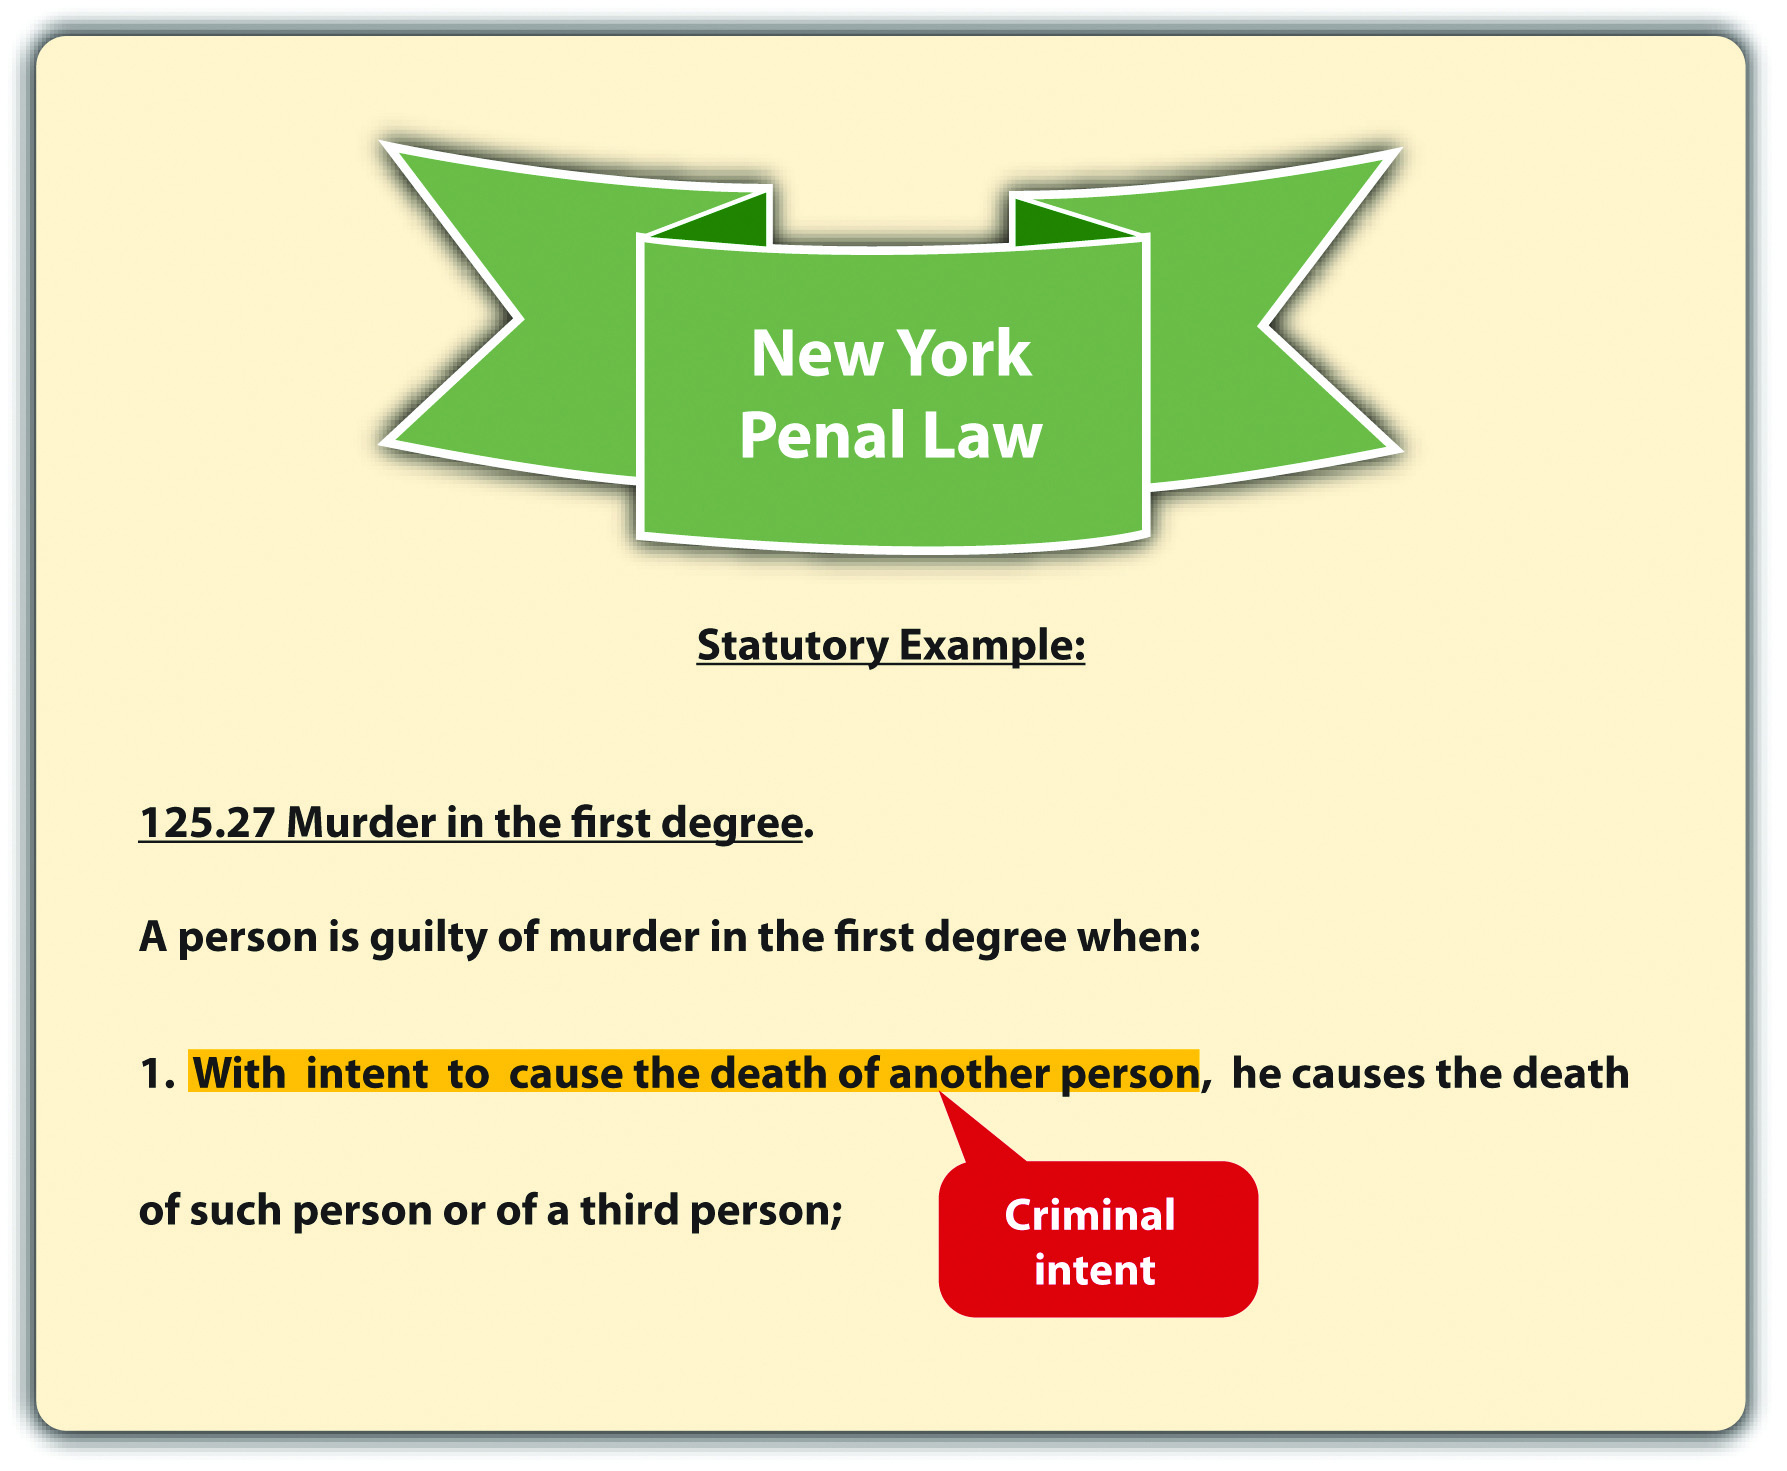 New York Penal Law